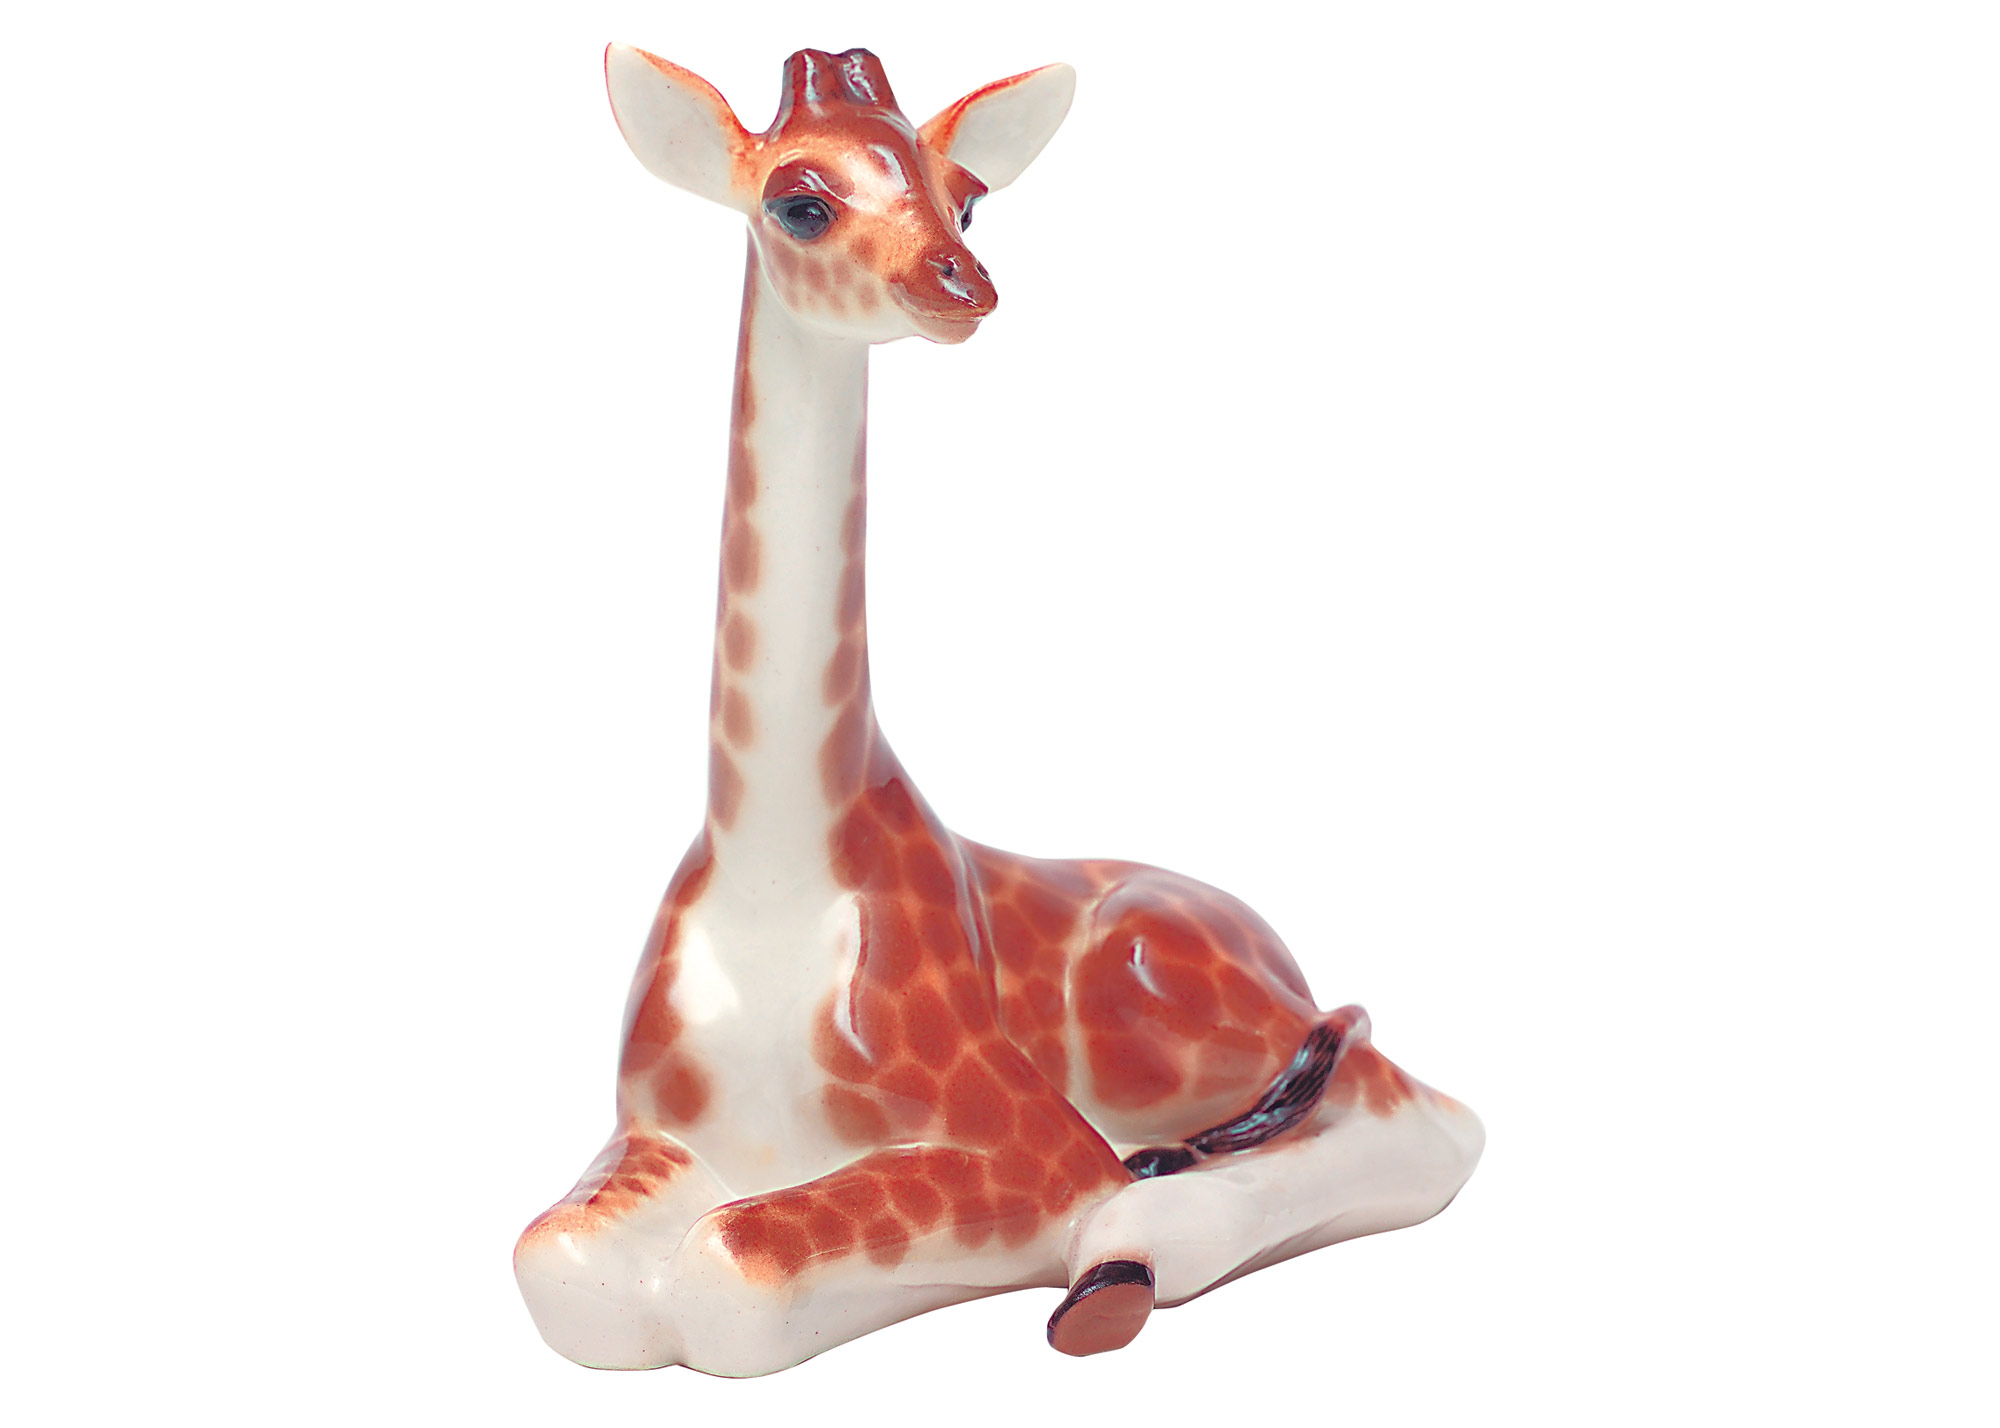 Buy Small Giraffe Figurine w/ Head Up at GoldenCockerel.com